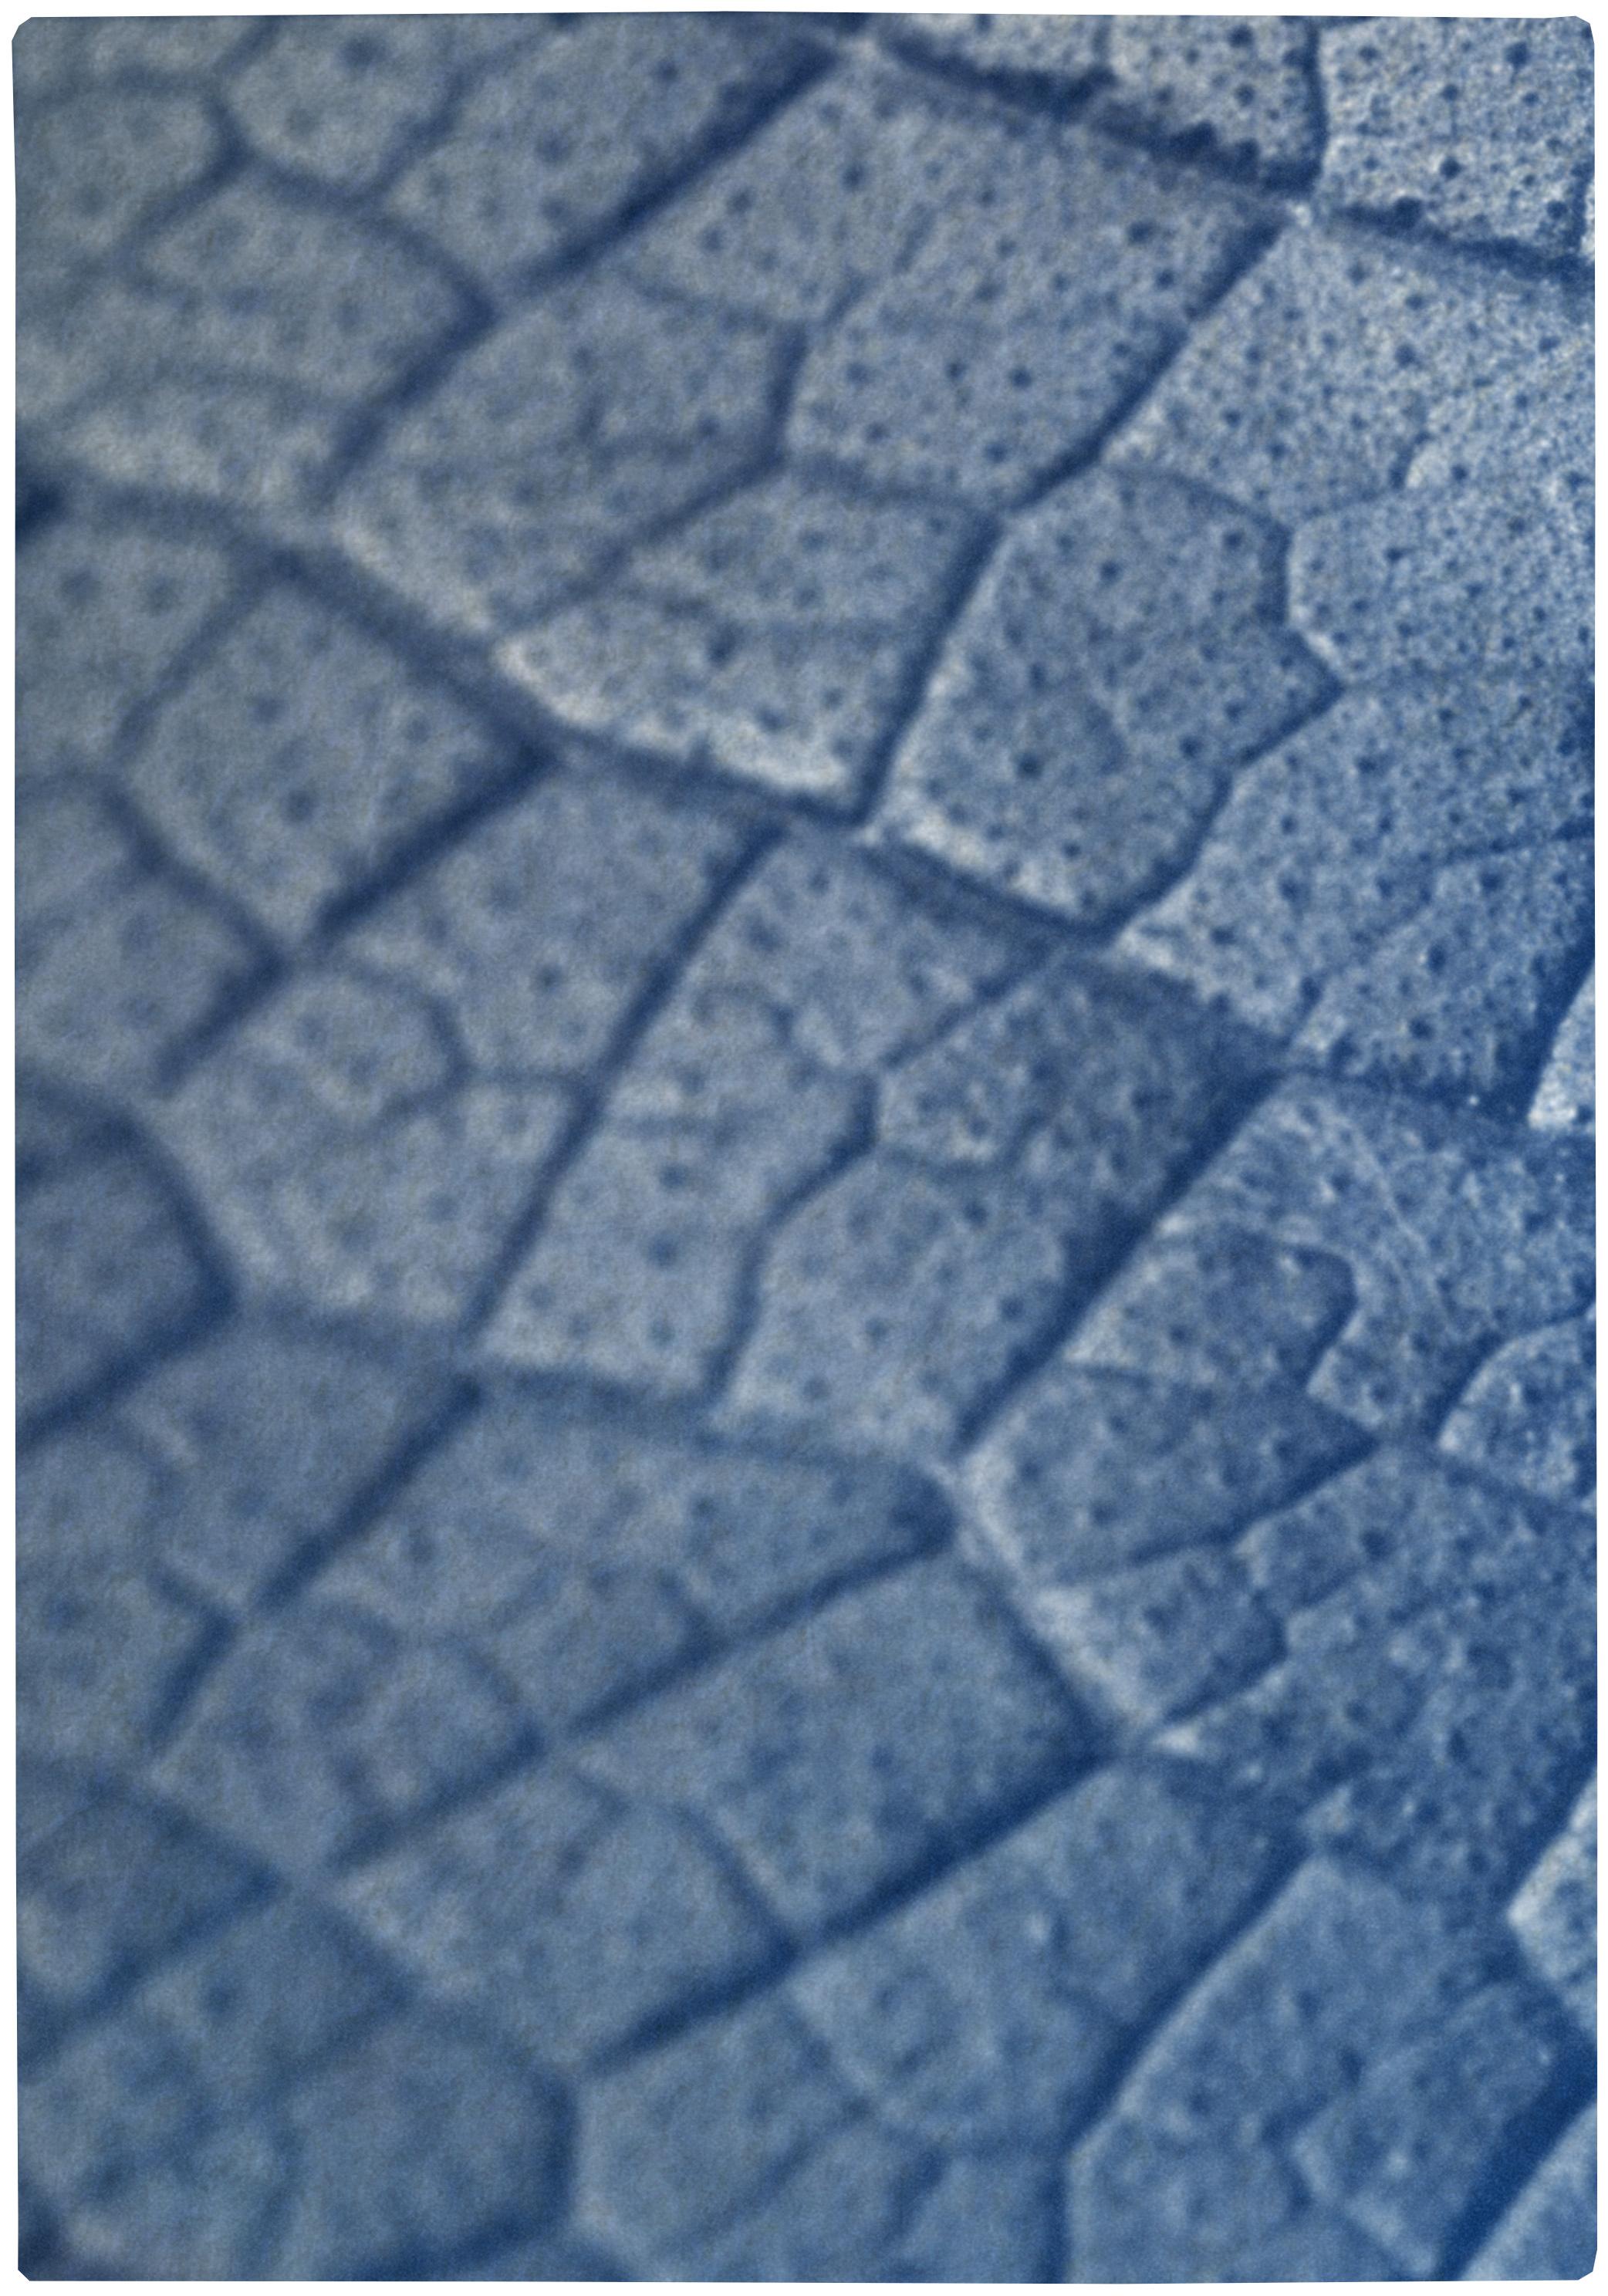 cyanotype prints for sale